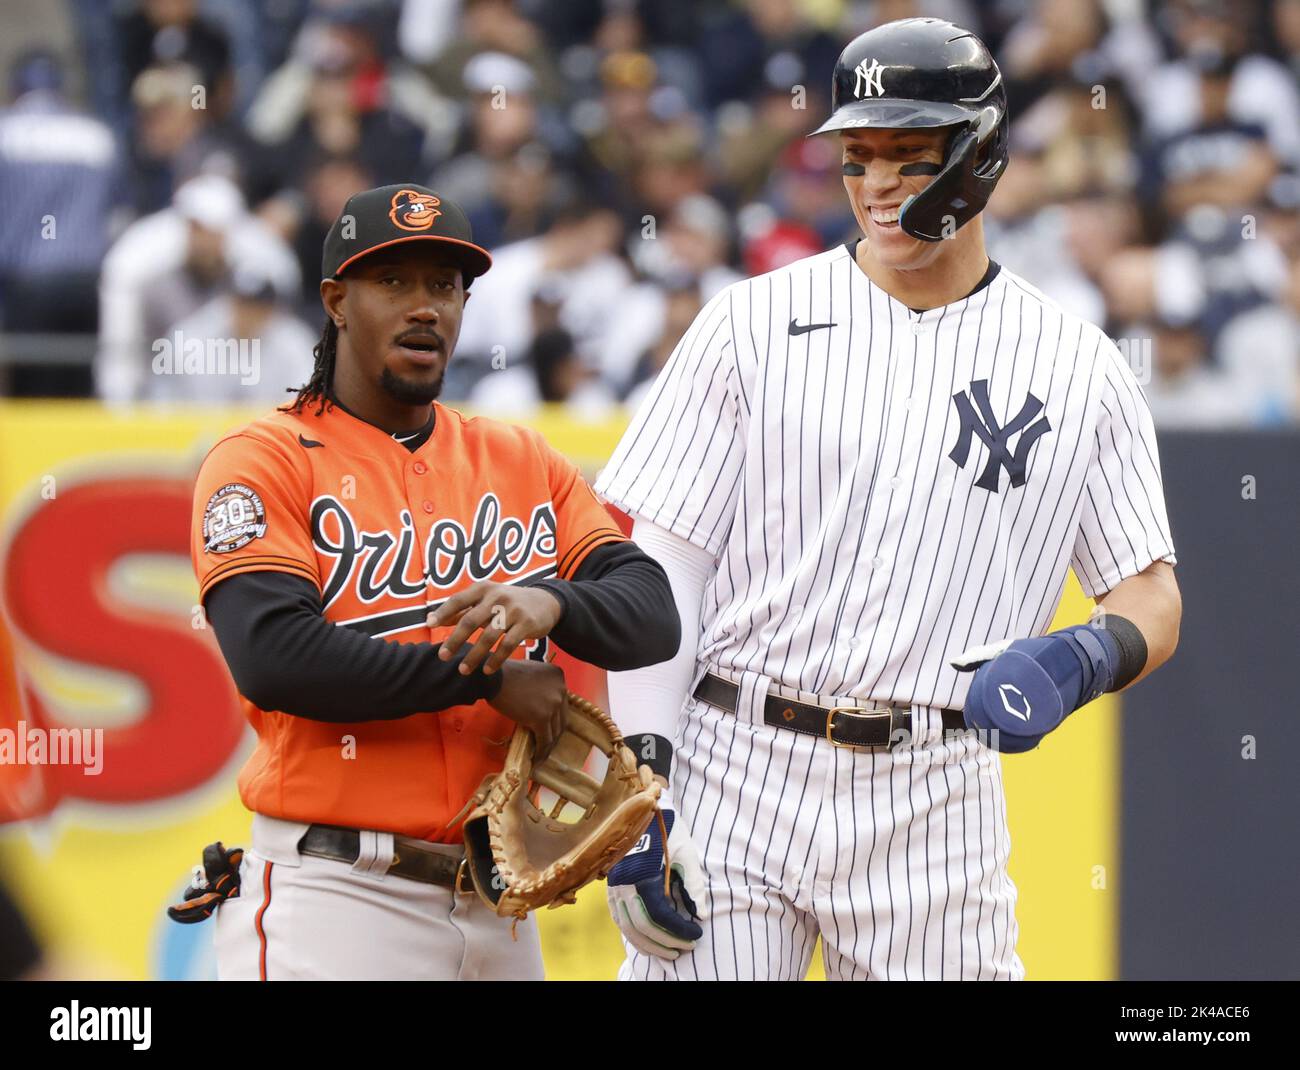 Jorge new york yankees baseball hi-res stock photography and images